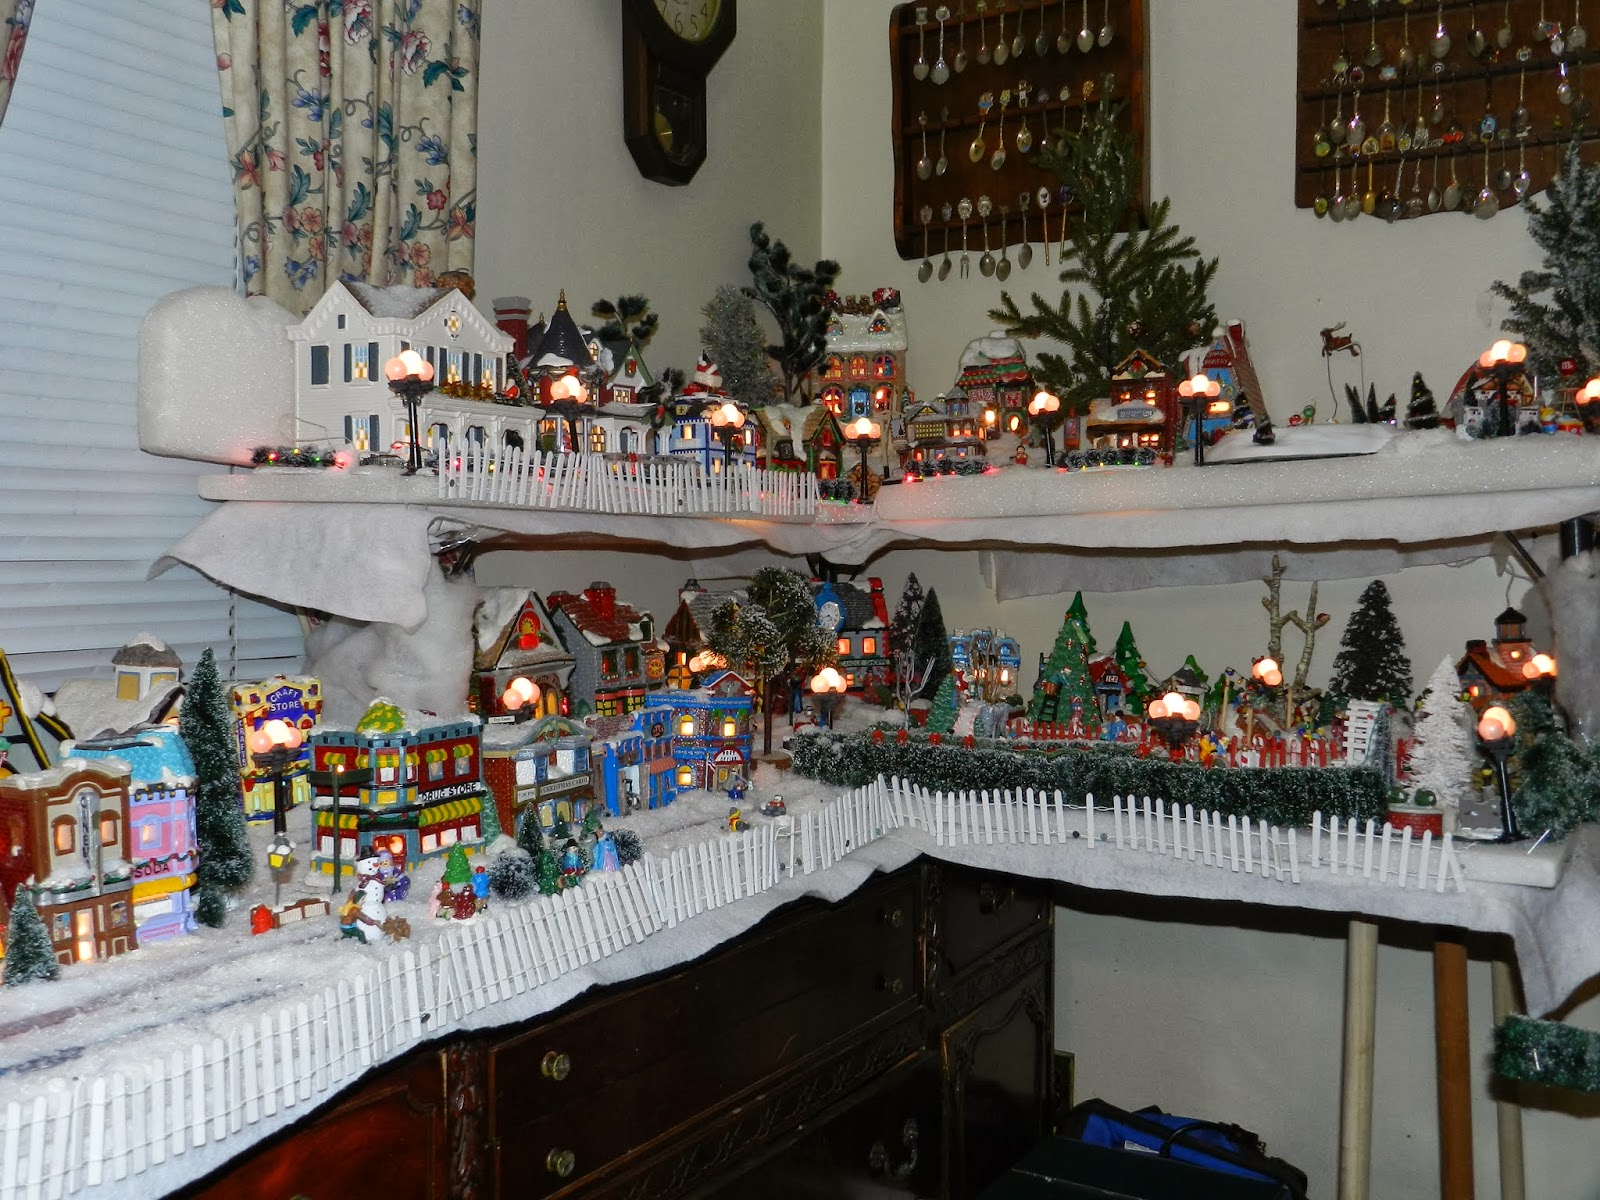 My Christmas Village: My Christmas Village